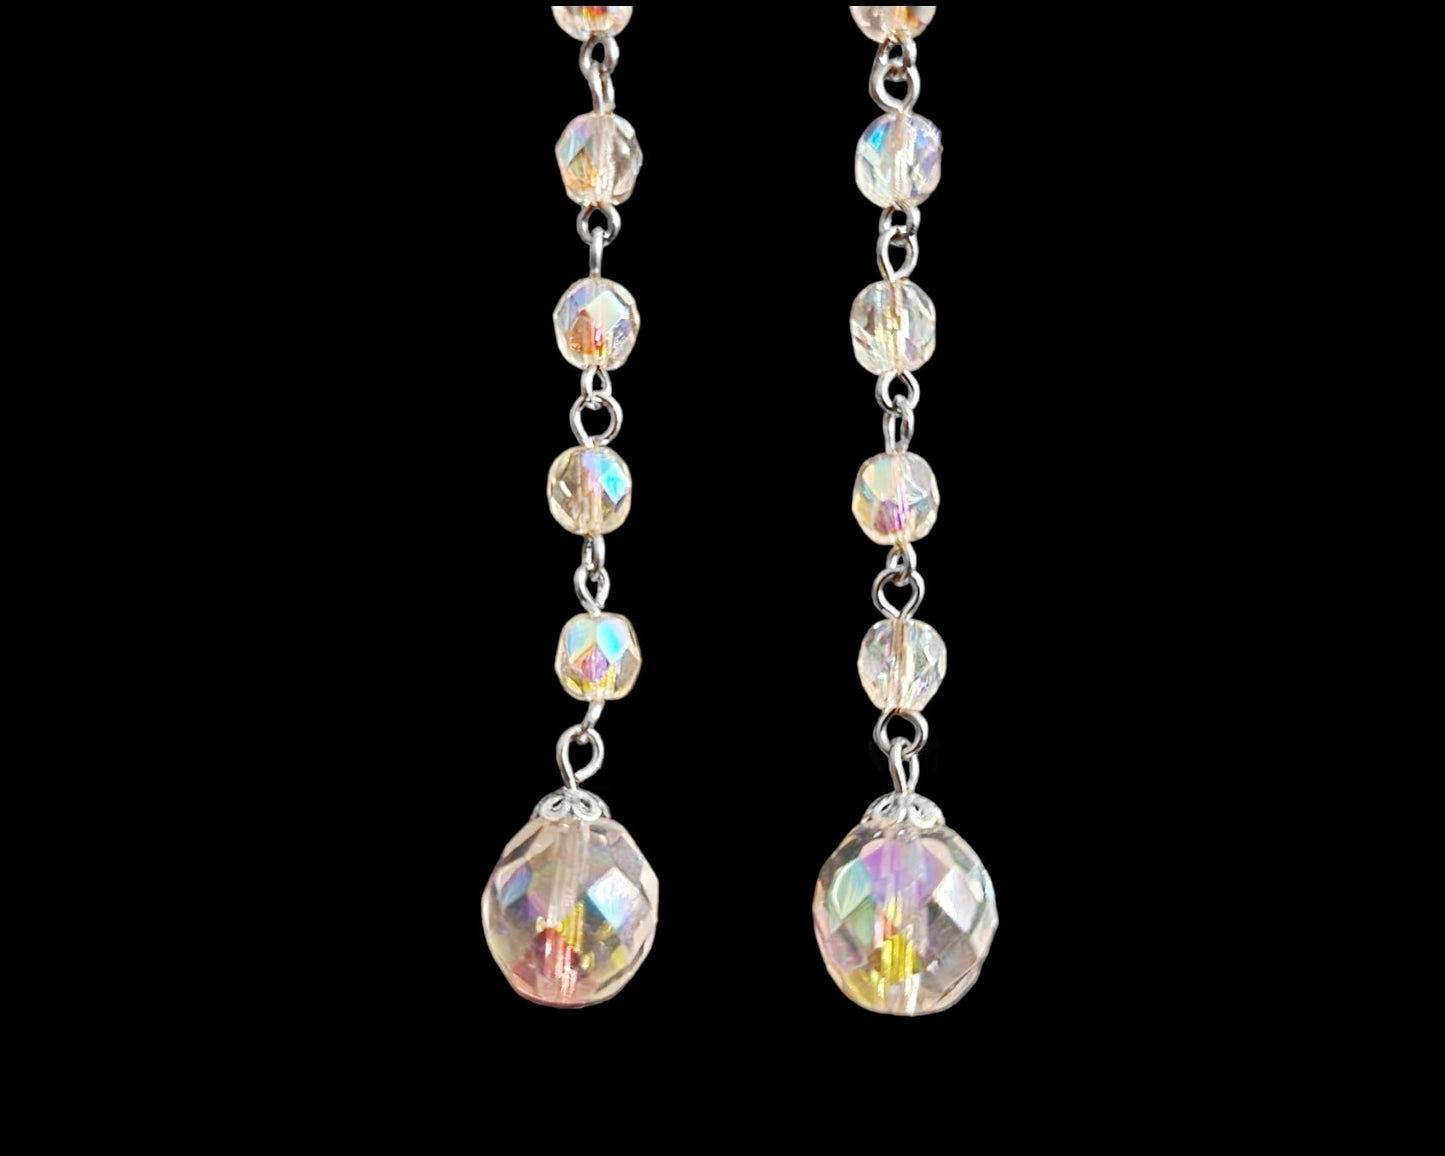 Extra Long Art Deco Style Crystal Brilliance Earrings, Long Clear Crystal AB, Long Dangle style Earrings